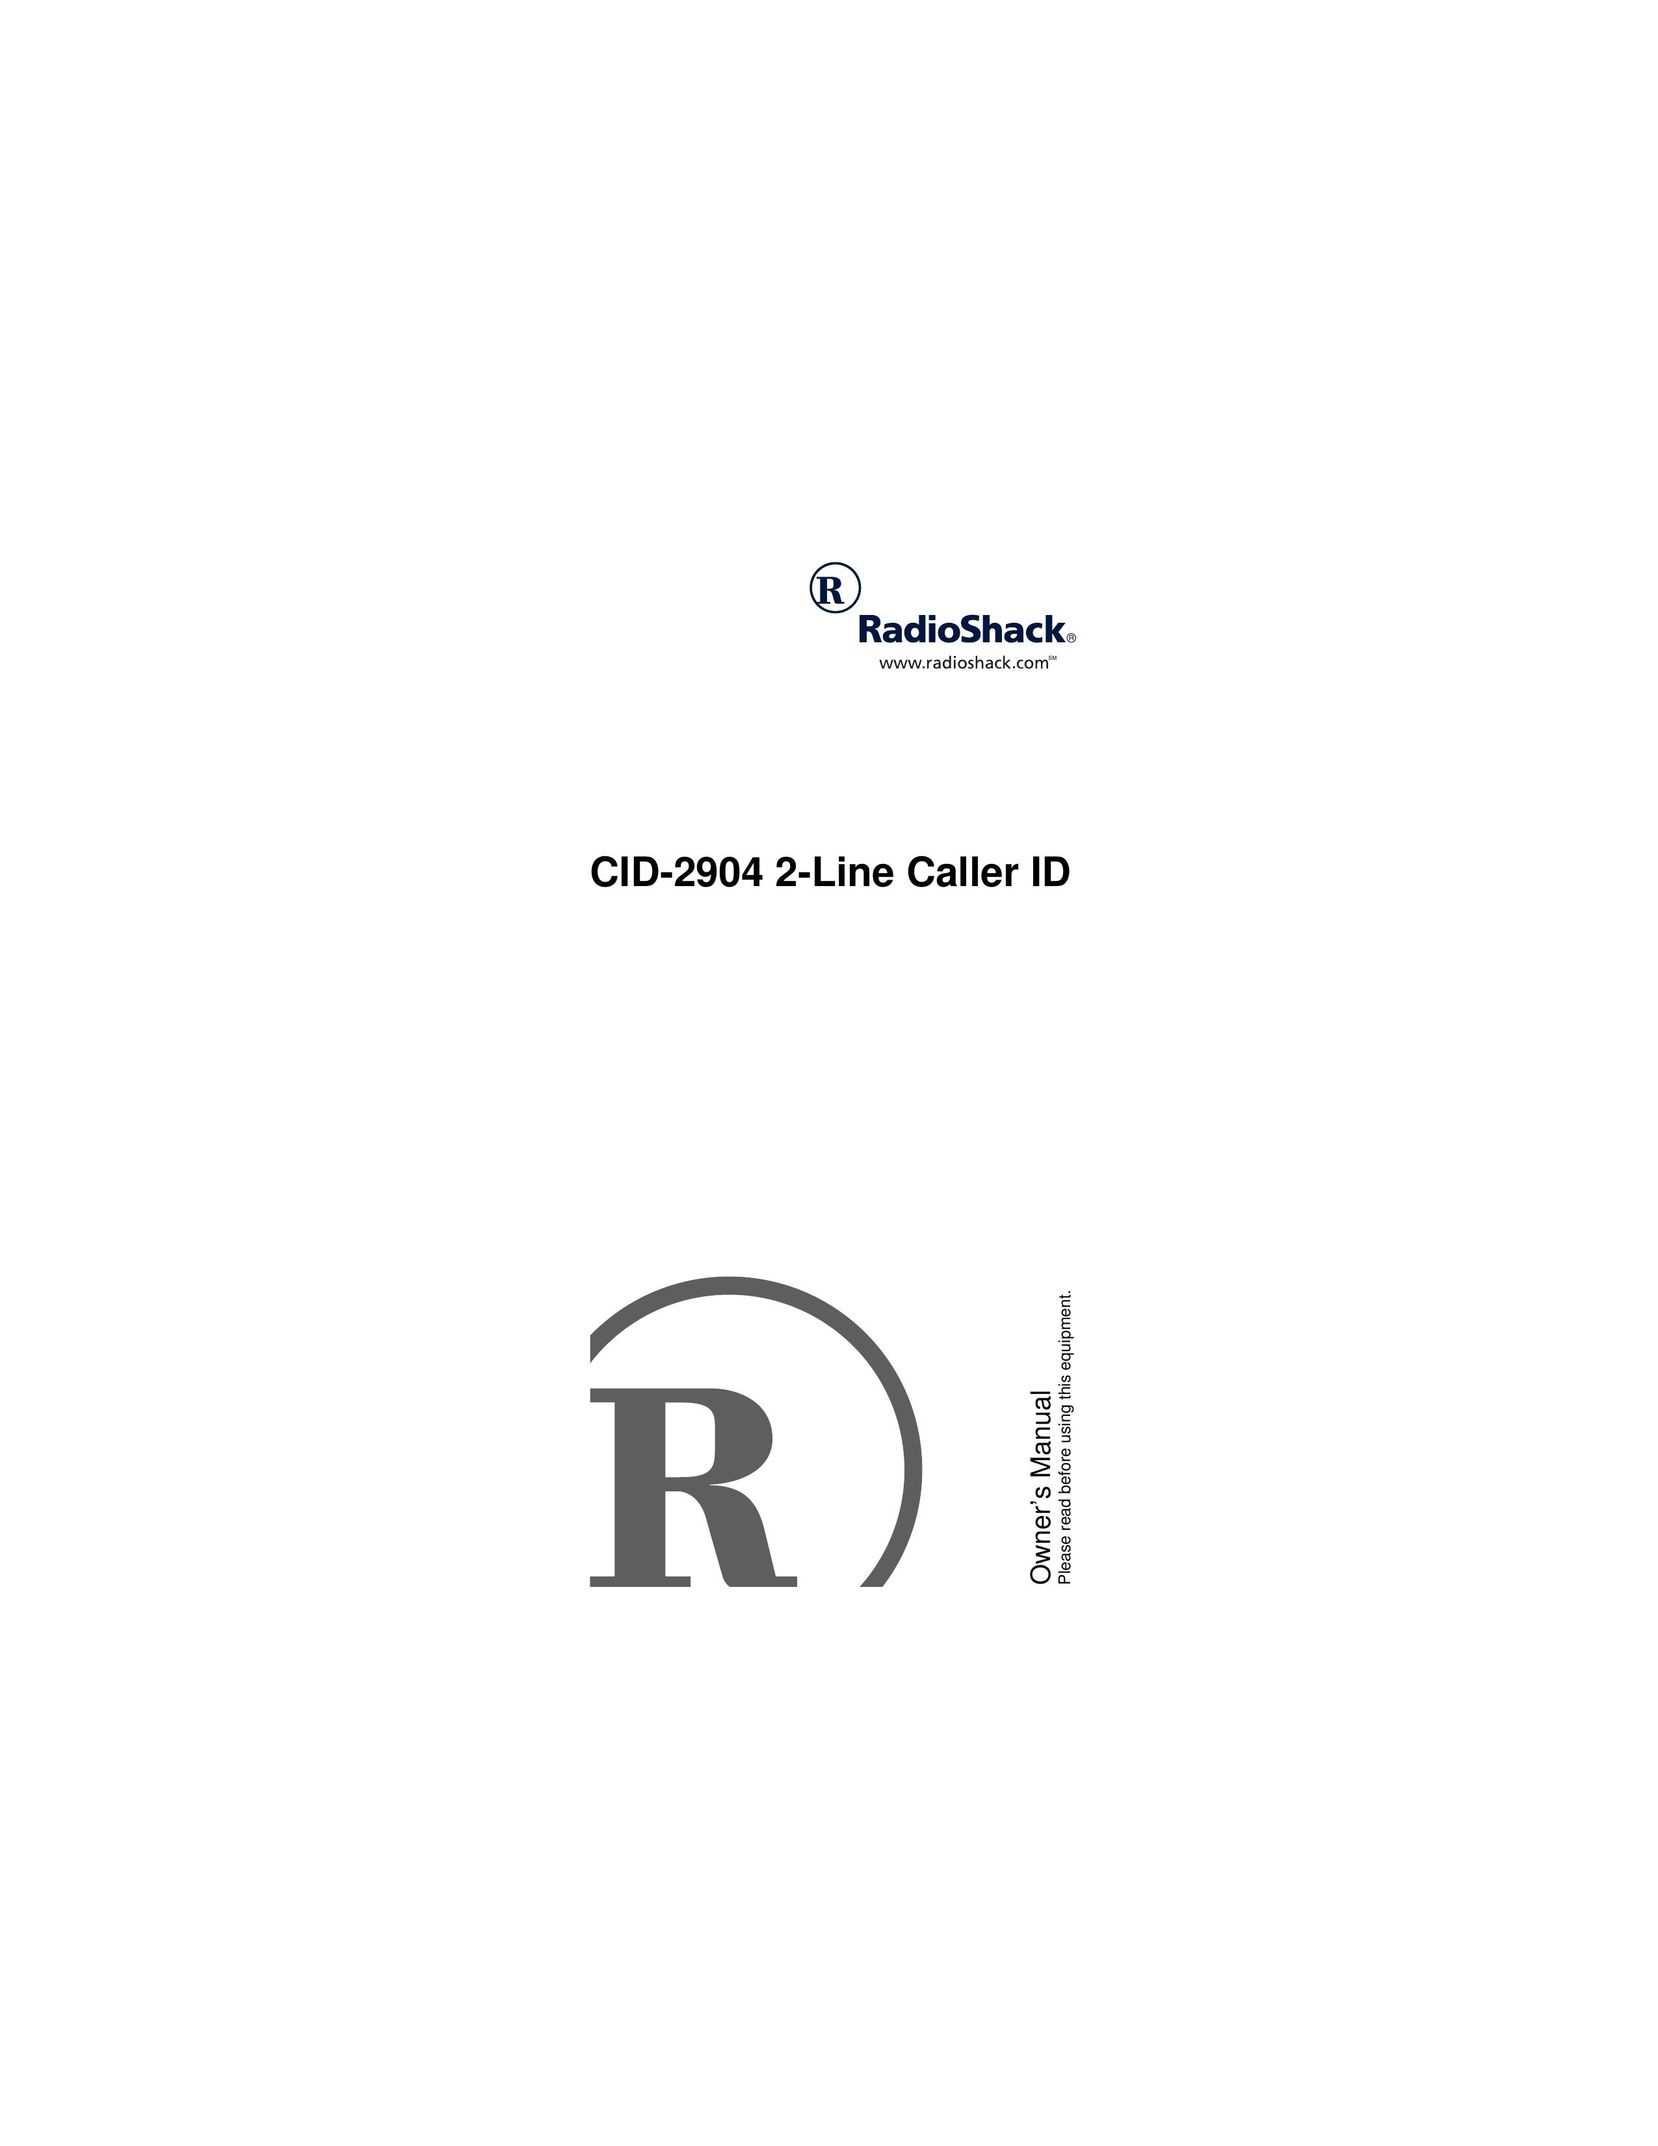 Radio Shack CID-2904 Caller ID Box User Manual